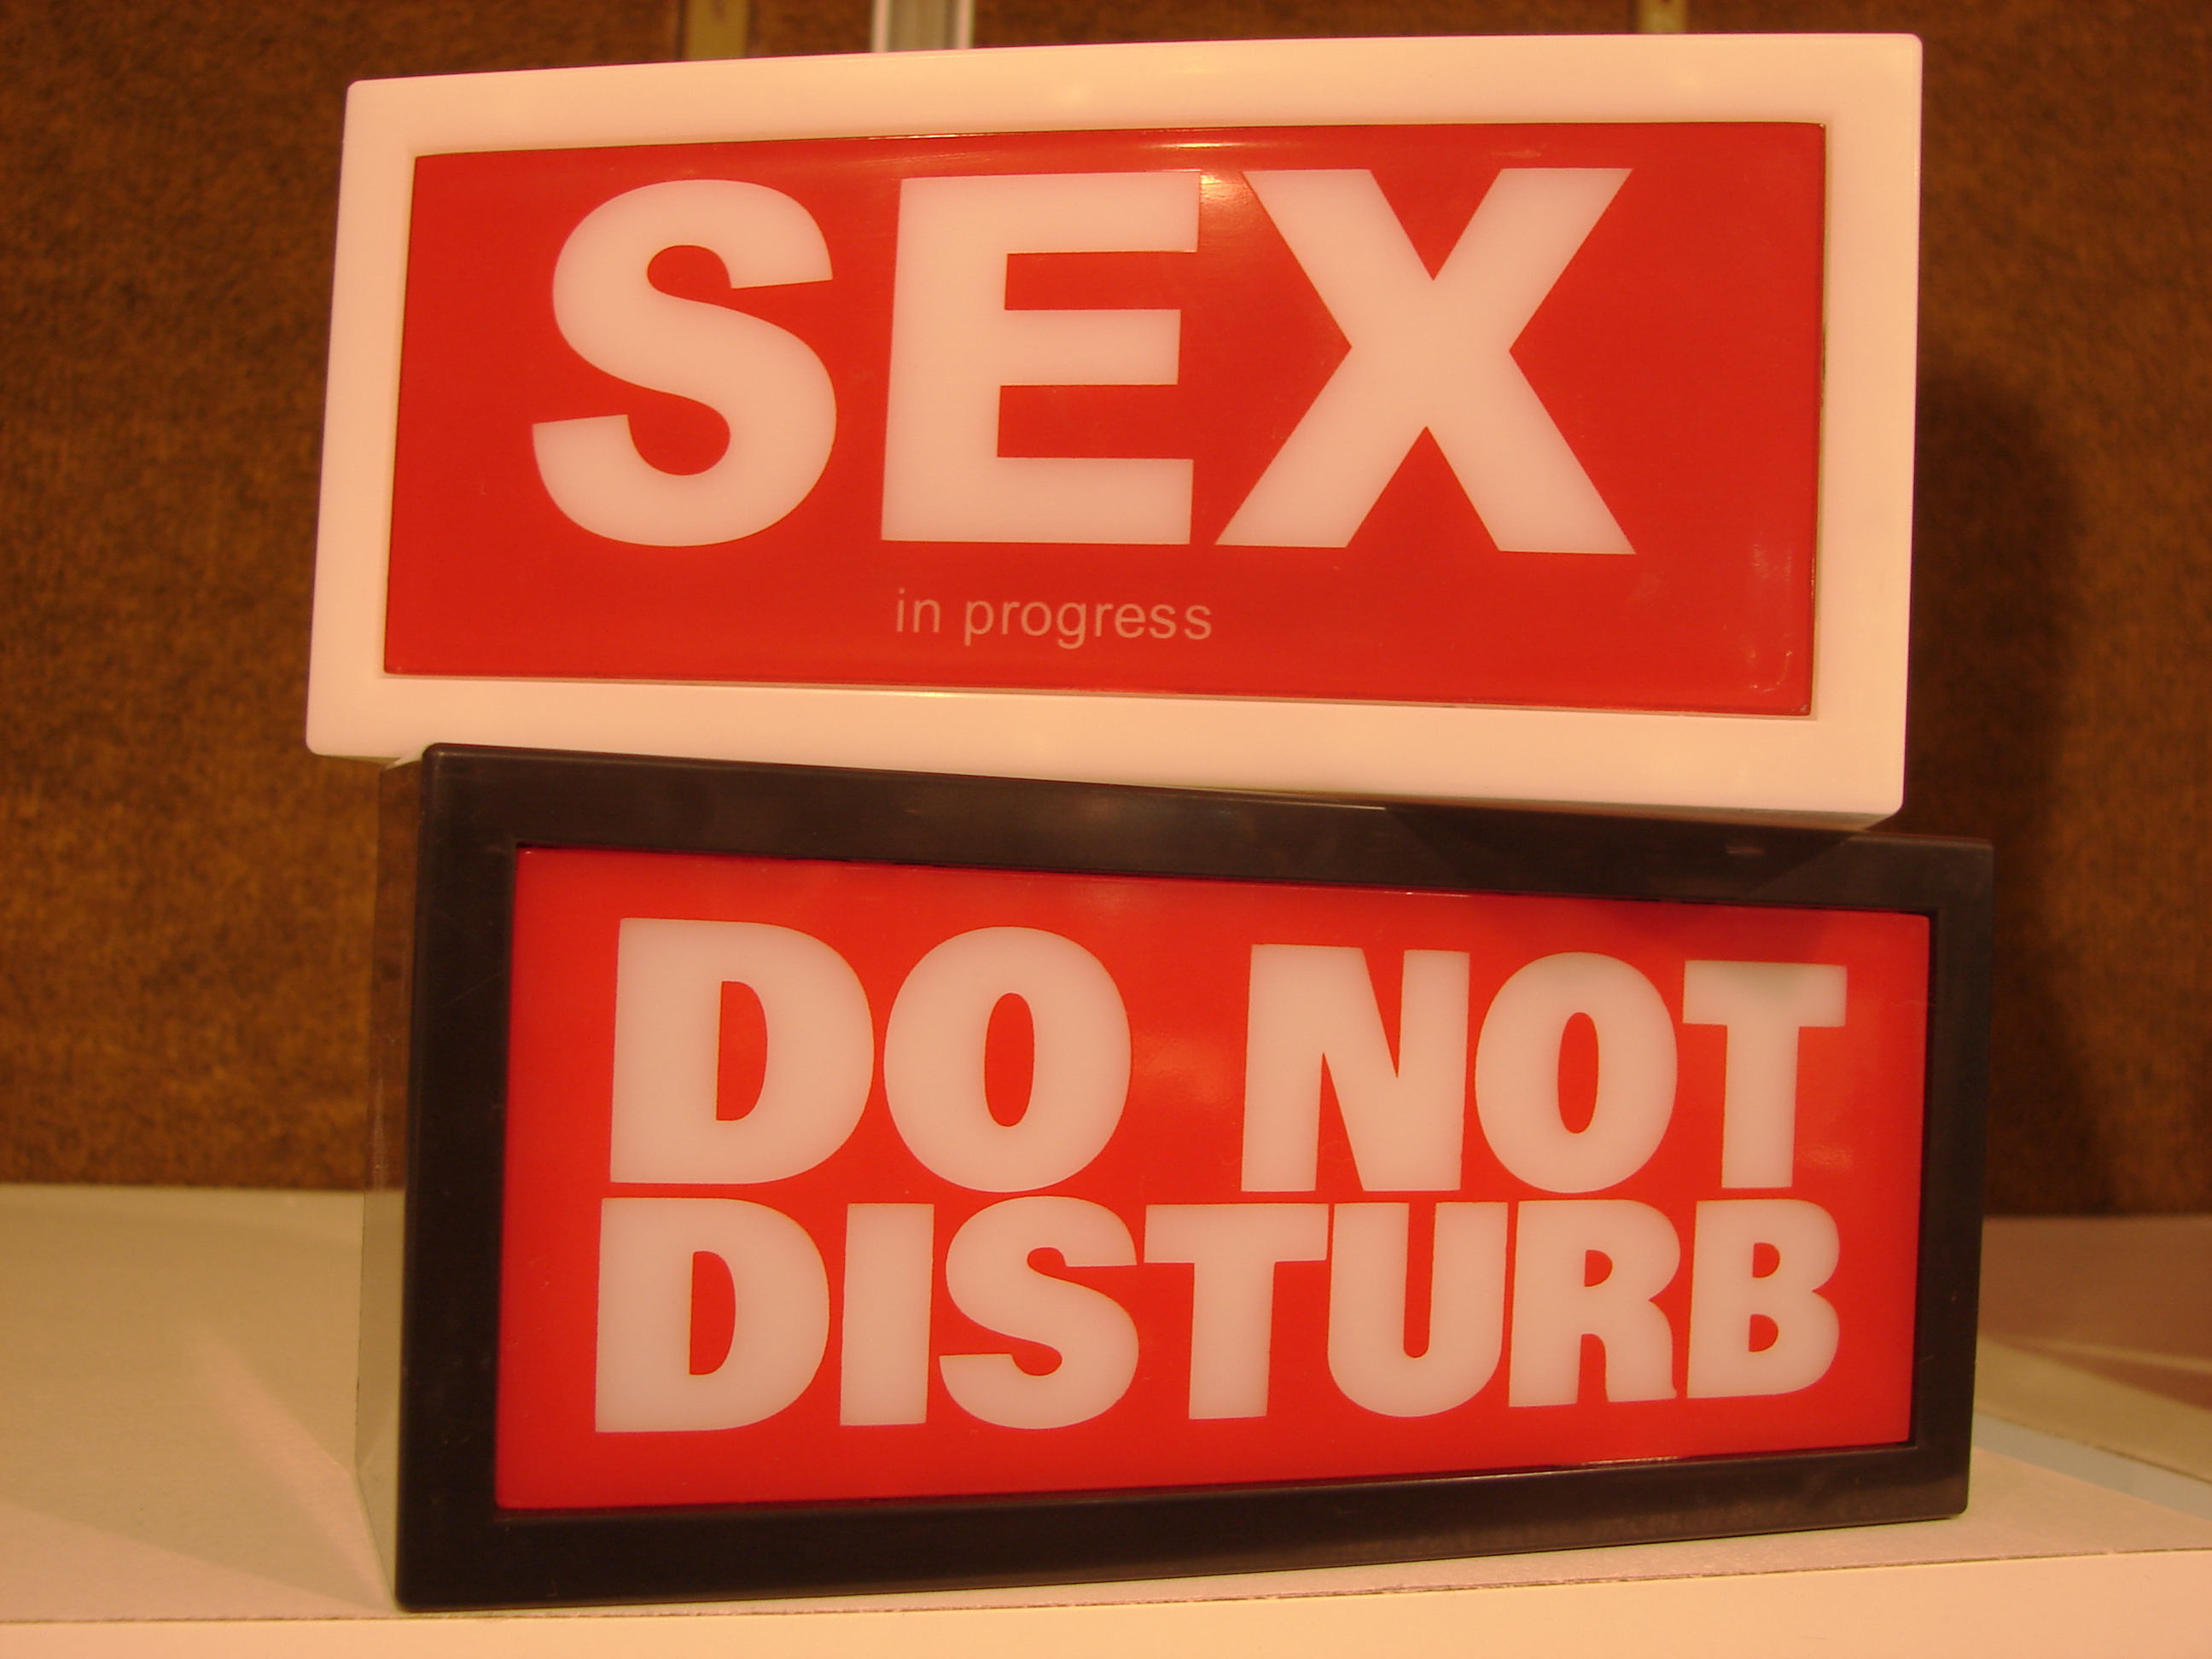 Warning_Sex_in_progress_Do_not_disturb